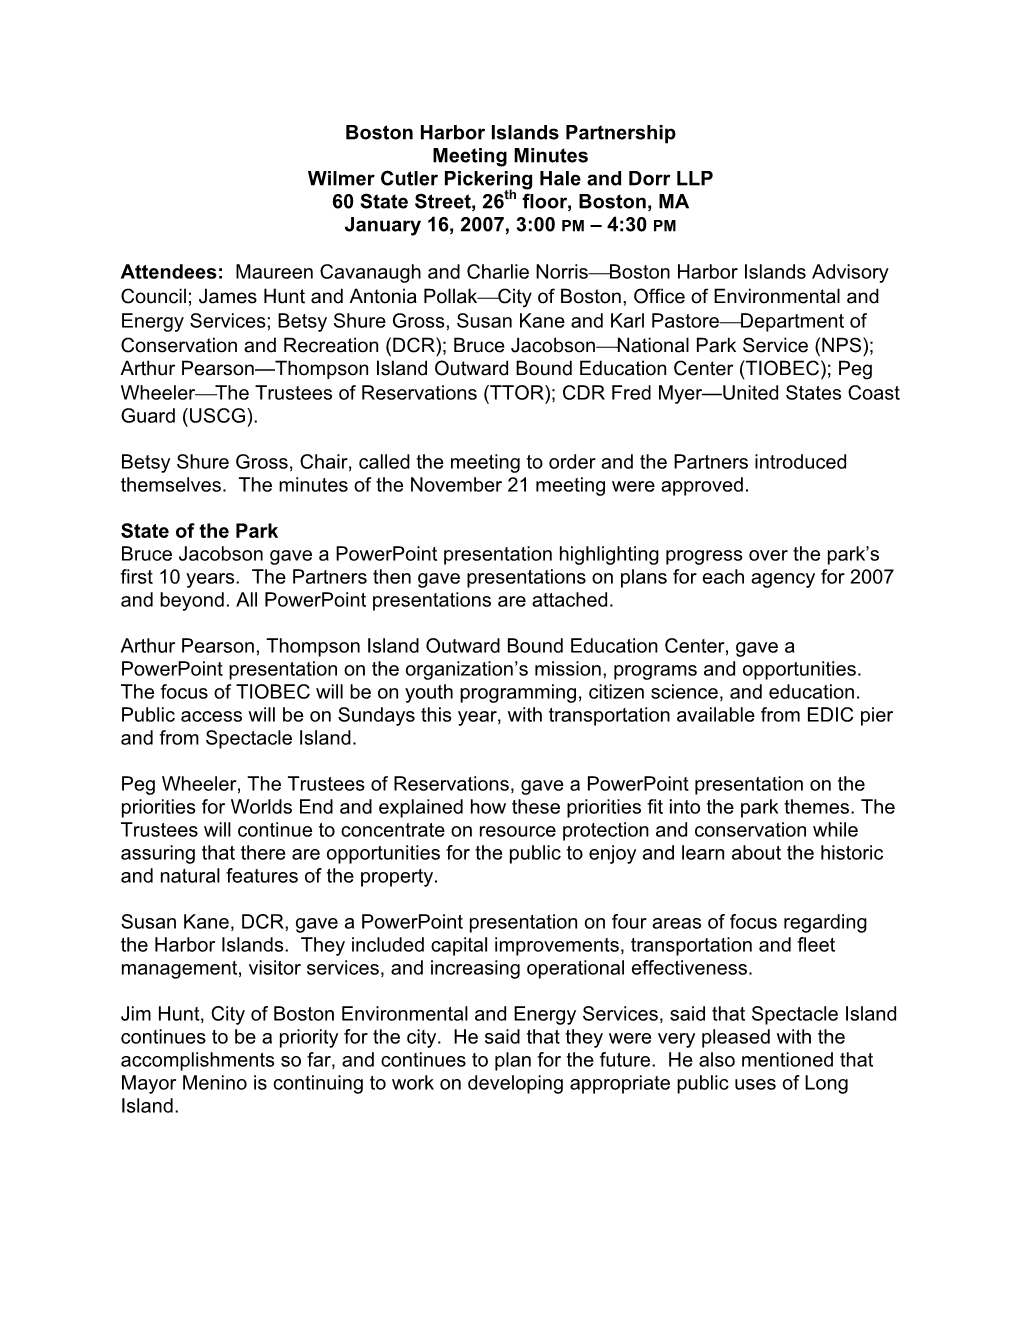 Boston Harbor Islands Partnership Meeting Minutes Wilmer Cutler